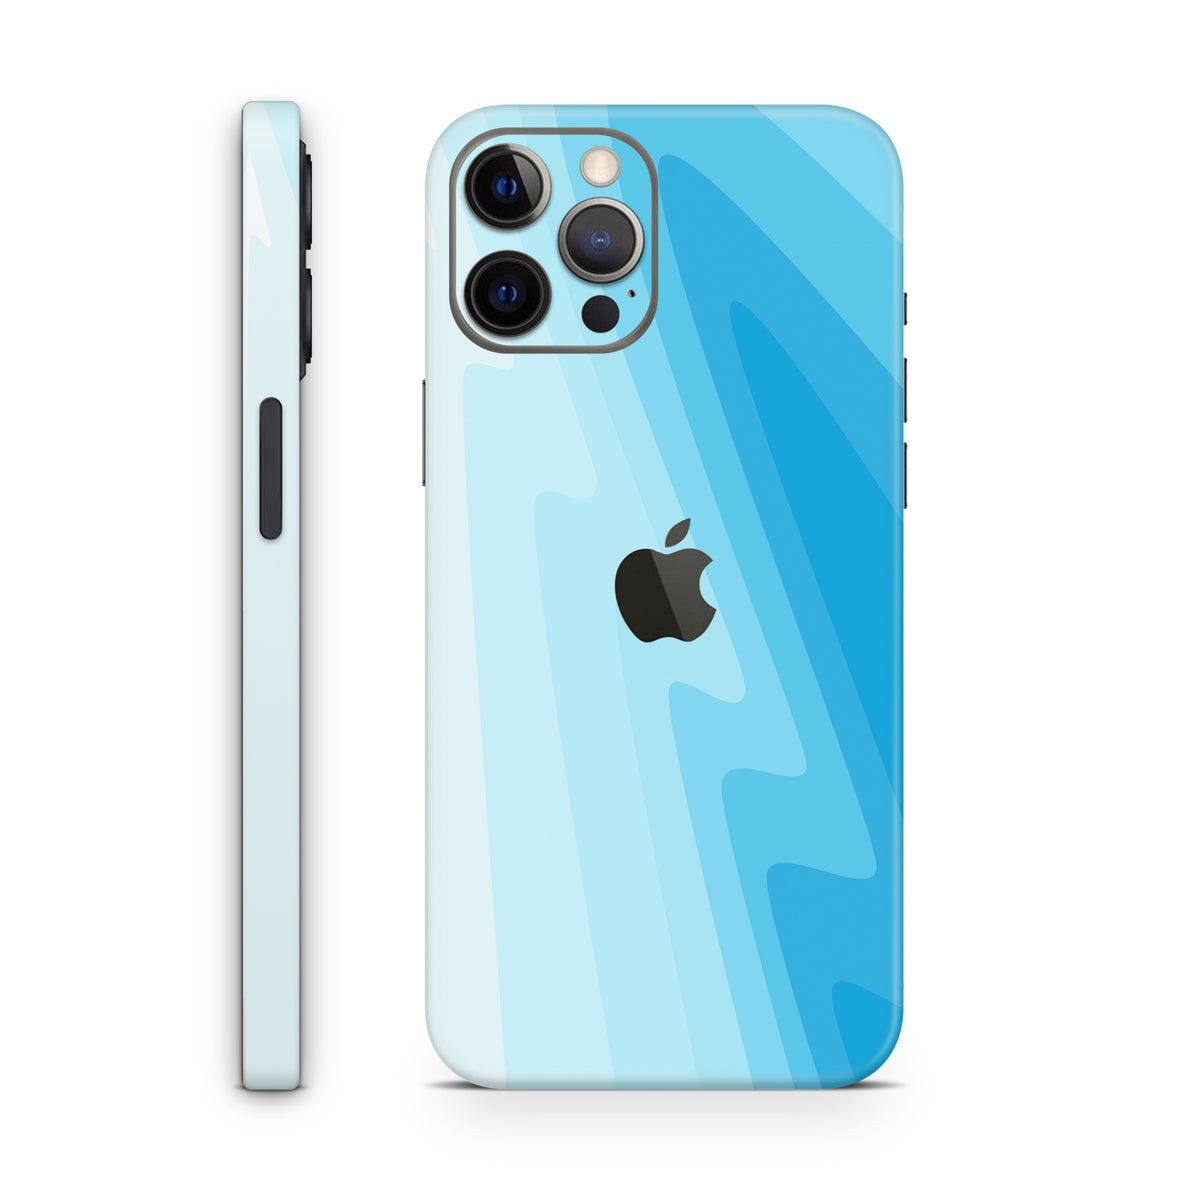 Aqua (iPhone Skin)